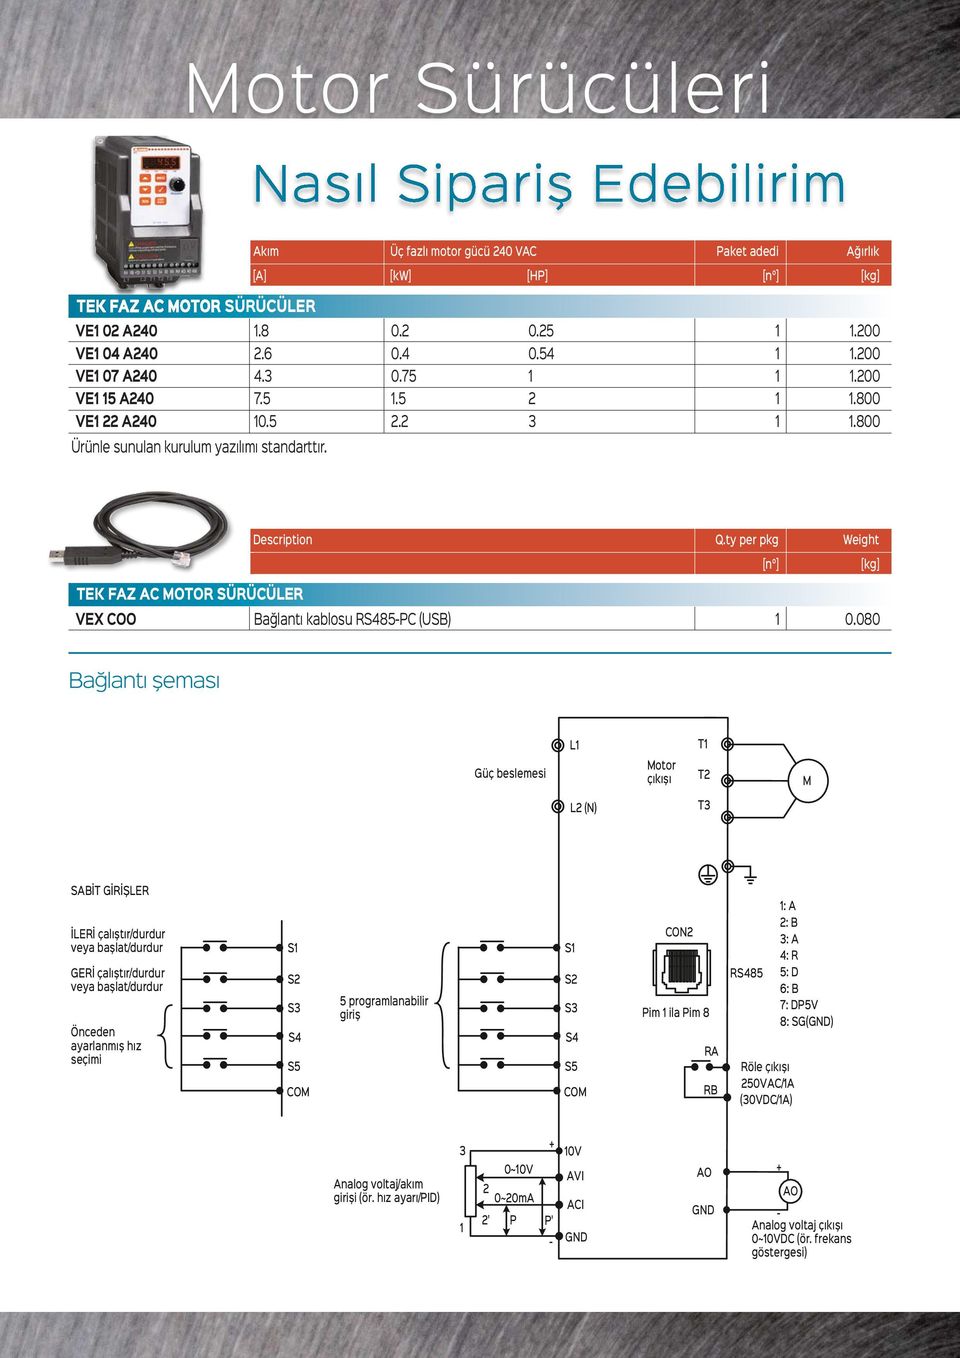 ty per pkg Weight [n ] [kg] TEK FAZ AC MOTOR SÜRÜCÜLER VEX COO Bağlantı kablosu RS485-PC (USB) 1 0.